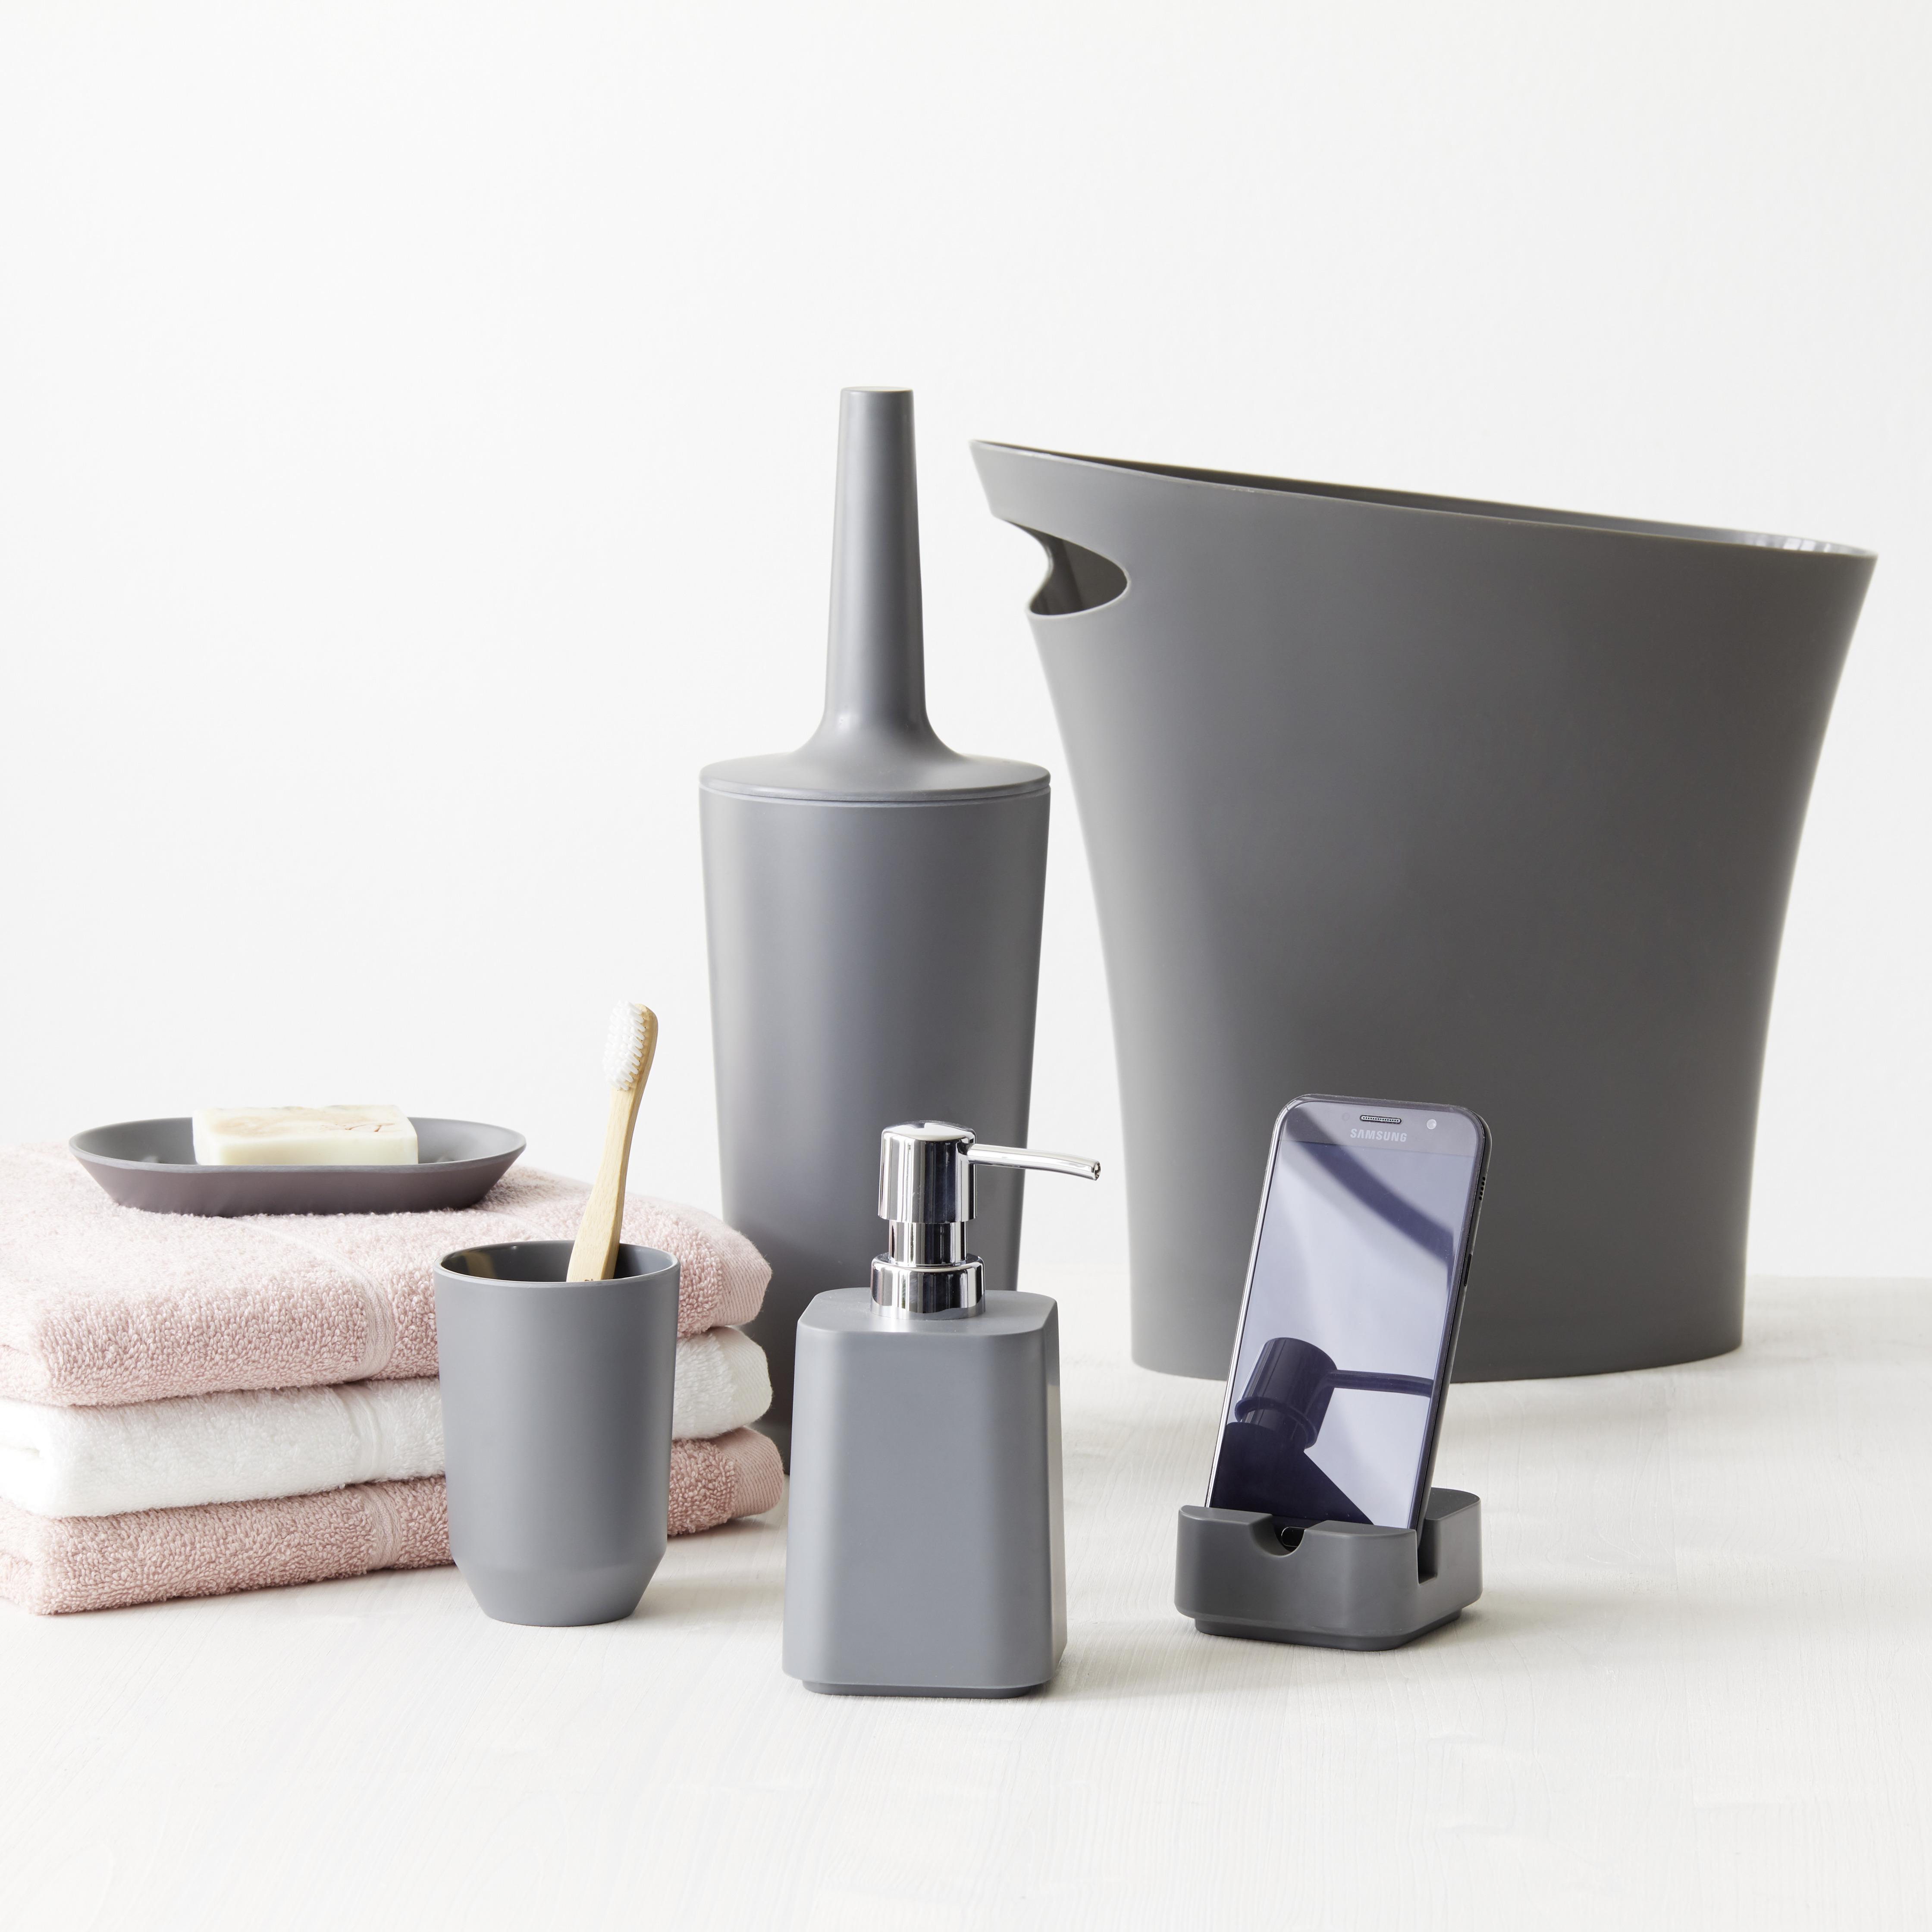 Kosmetikeimer Lilo aus Kunststoff in Grau - Grau, MODERN, Kunststoff (34/16/33cm) - Modern Living